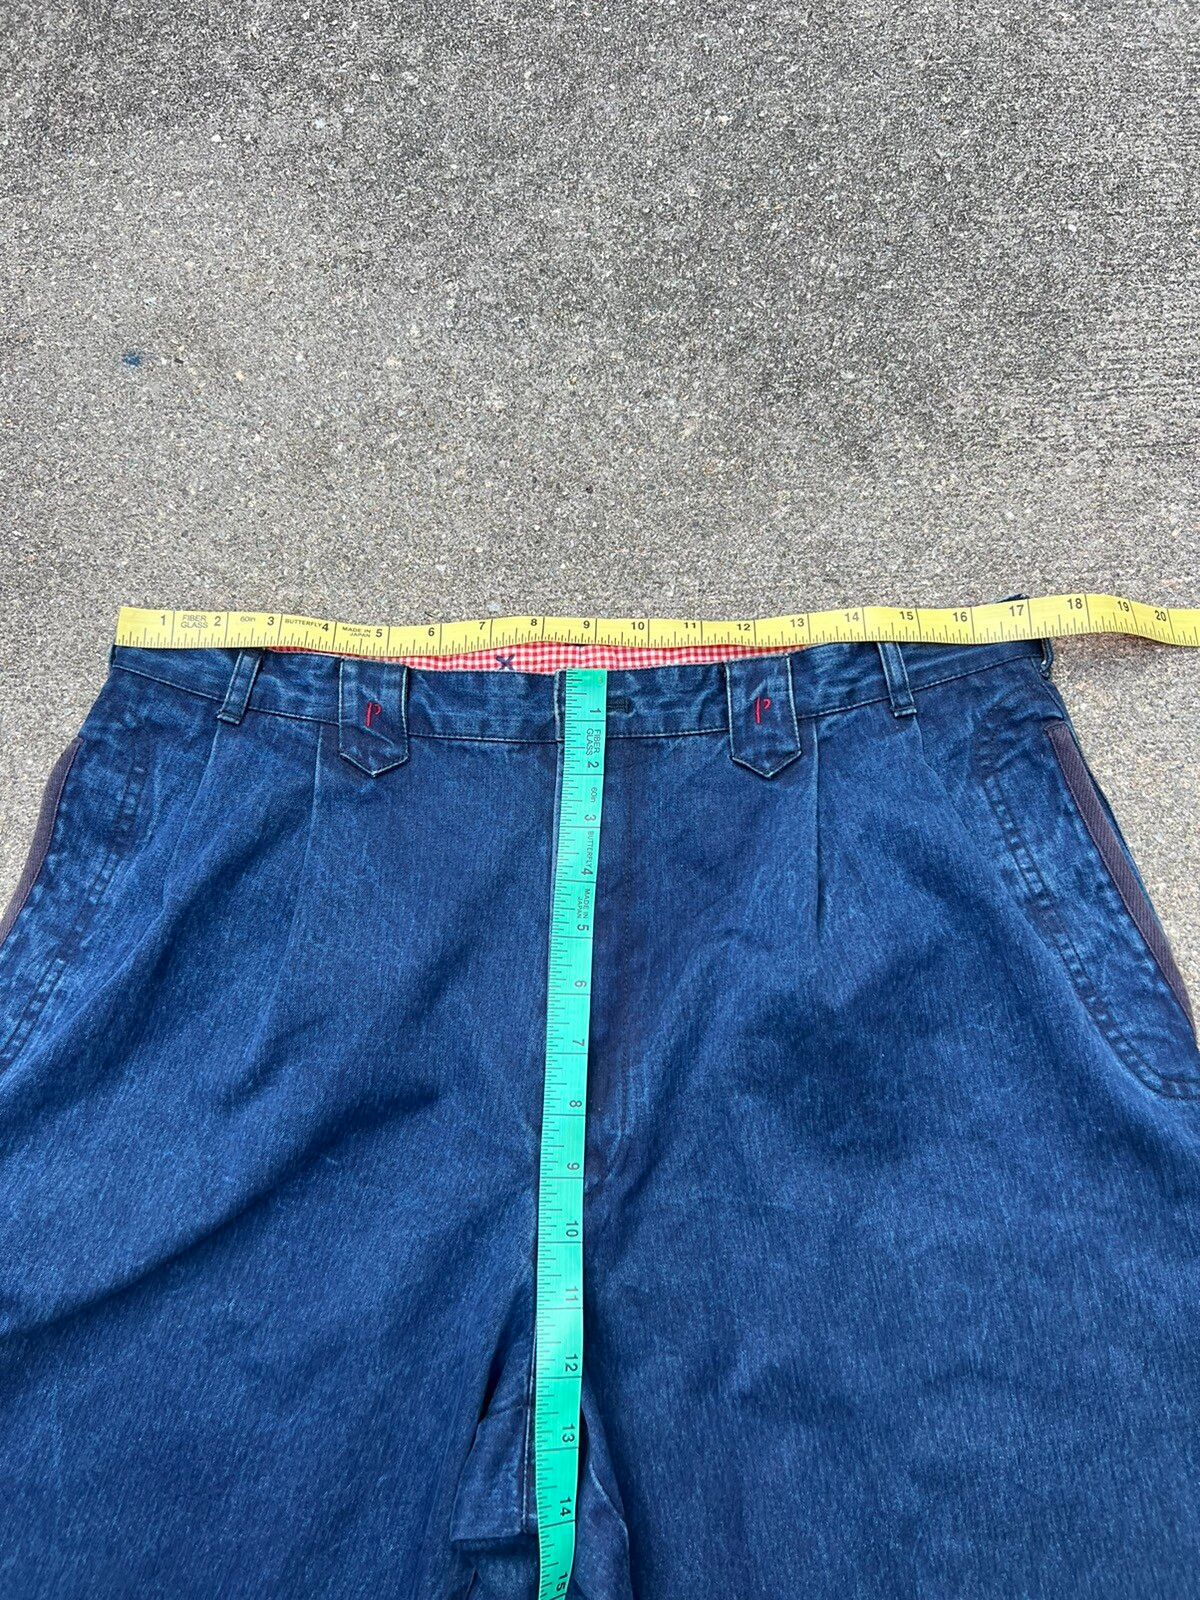 Orslow Vintage Papas Japan Sun Faded Indigo Blue Baggy Chinos Pant Size US 34 / EU 50 - 2 Preview